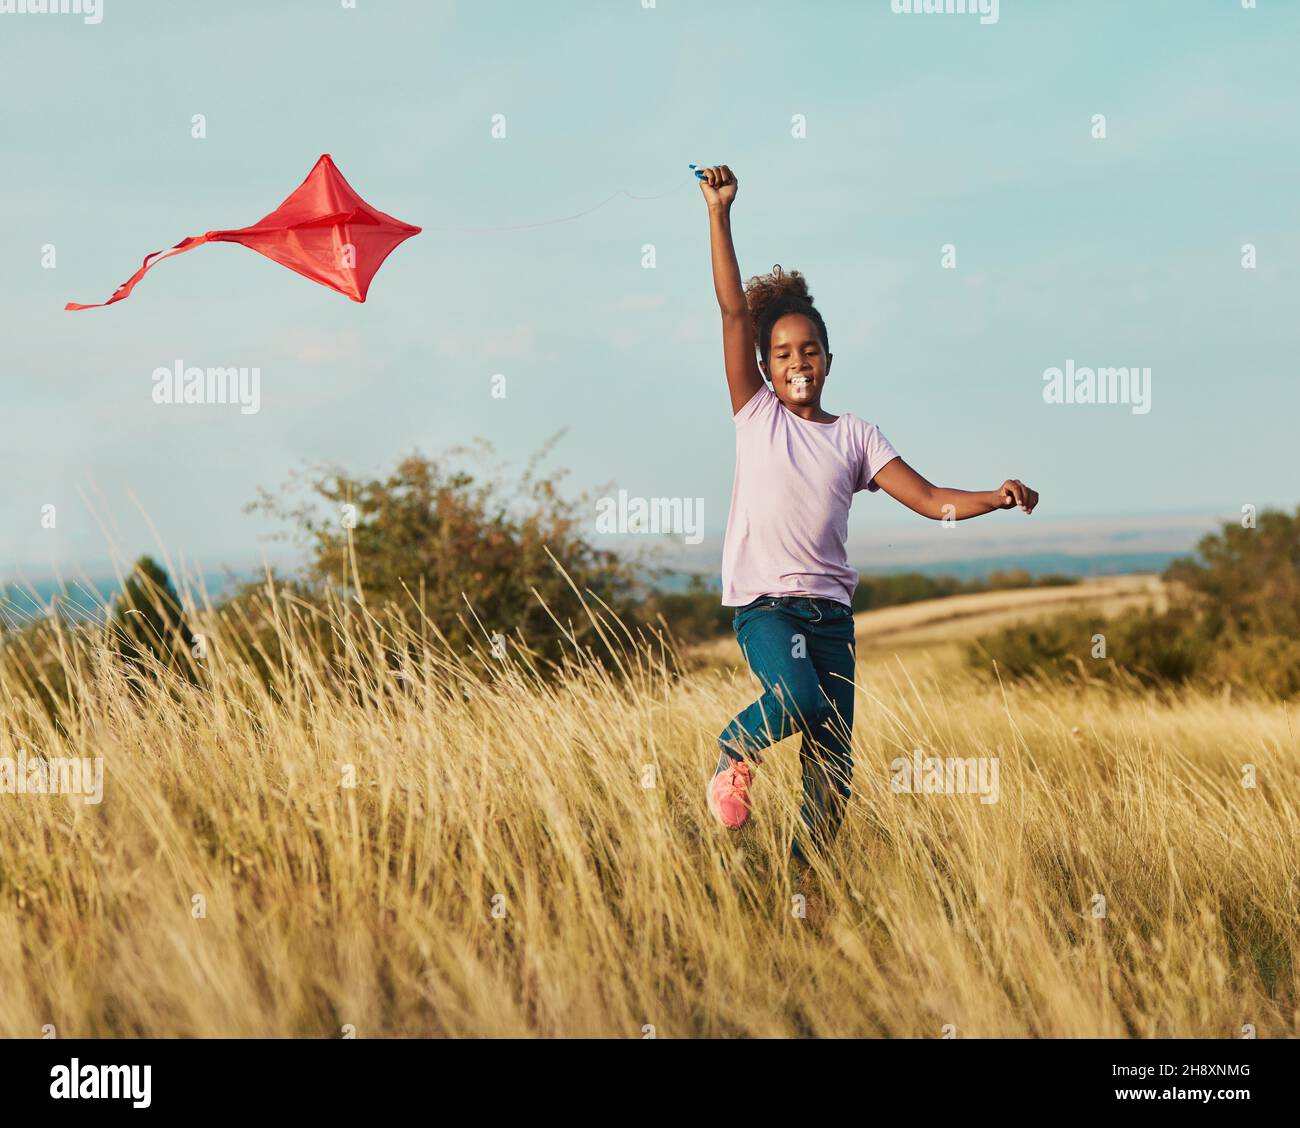 child summer fun lifestyle friend kite outdoor girl field joy childhood run Stock Photo